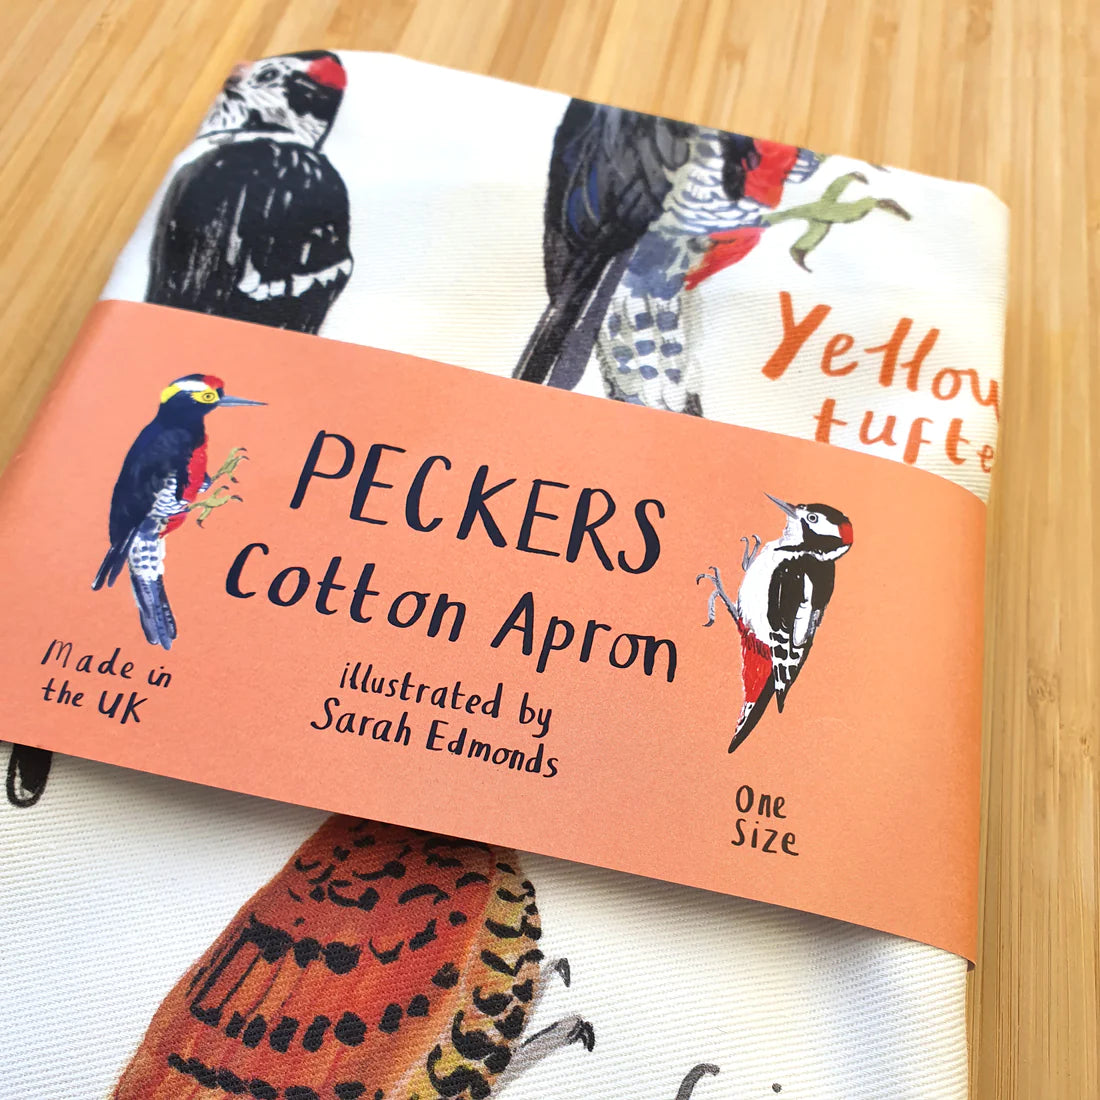 Peckers Cotton Apron